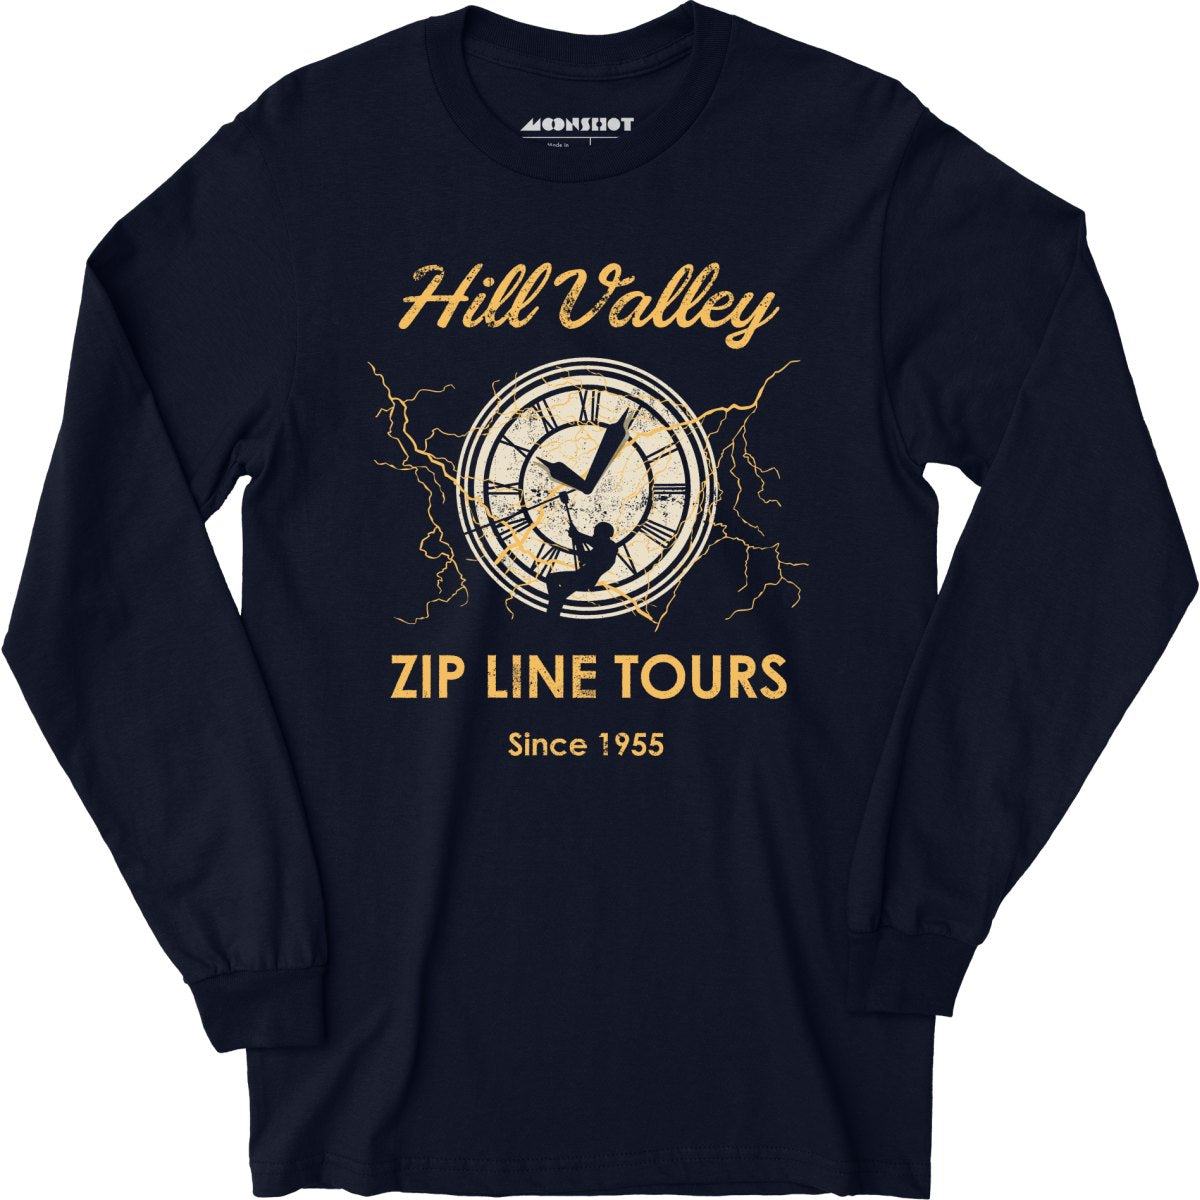 Hill Valley Zip Line Tours - Long Sleeve T-Shirt